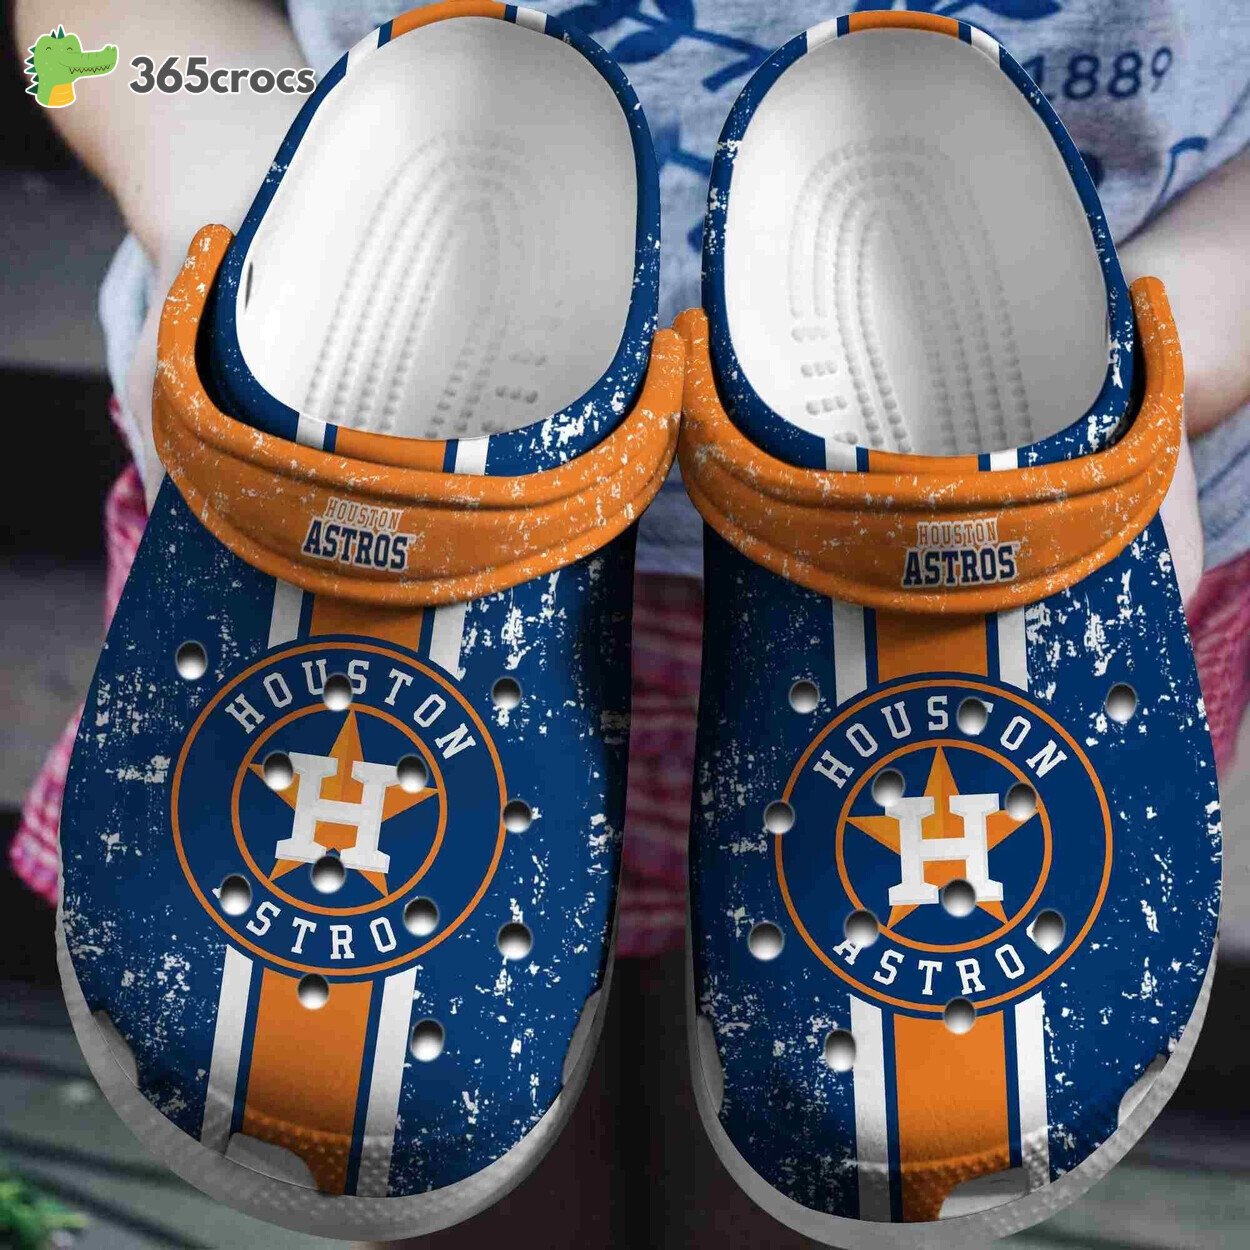 Houston Astros Baseball Theme Unique Comfortable Crocss Clogs Footwear